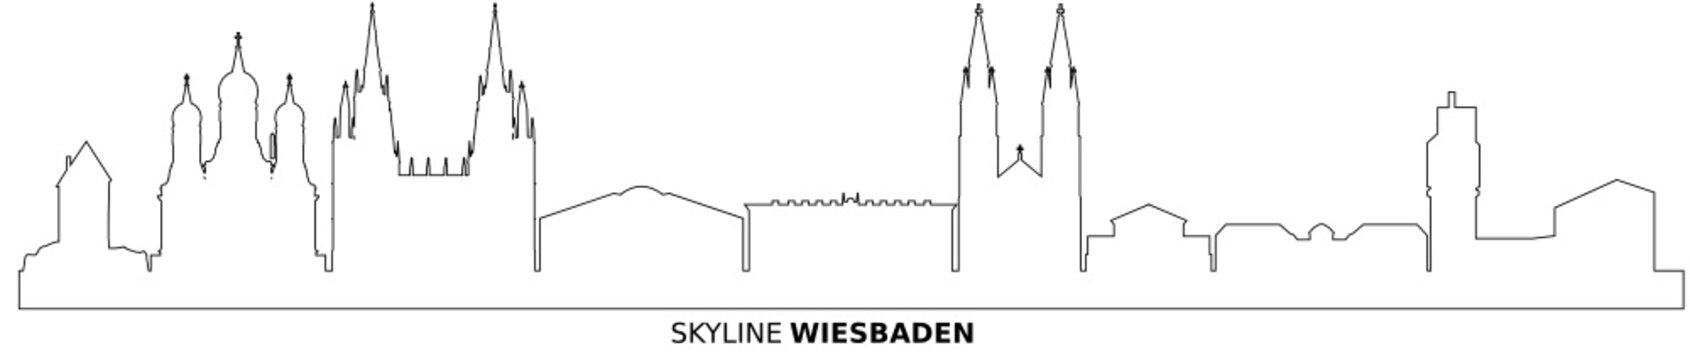 Skyline Wiesbaden © Instantly